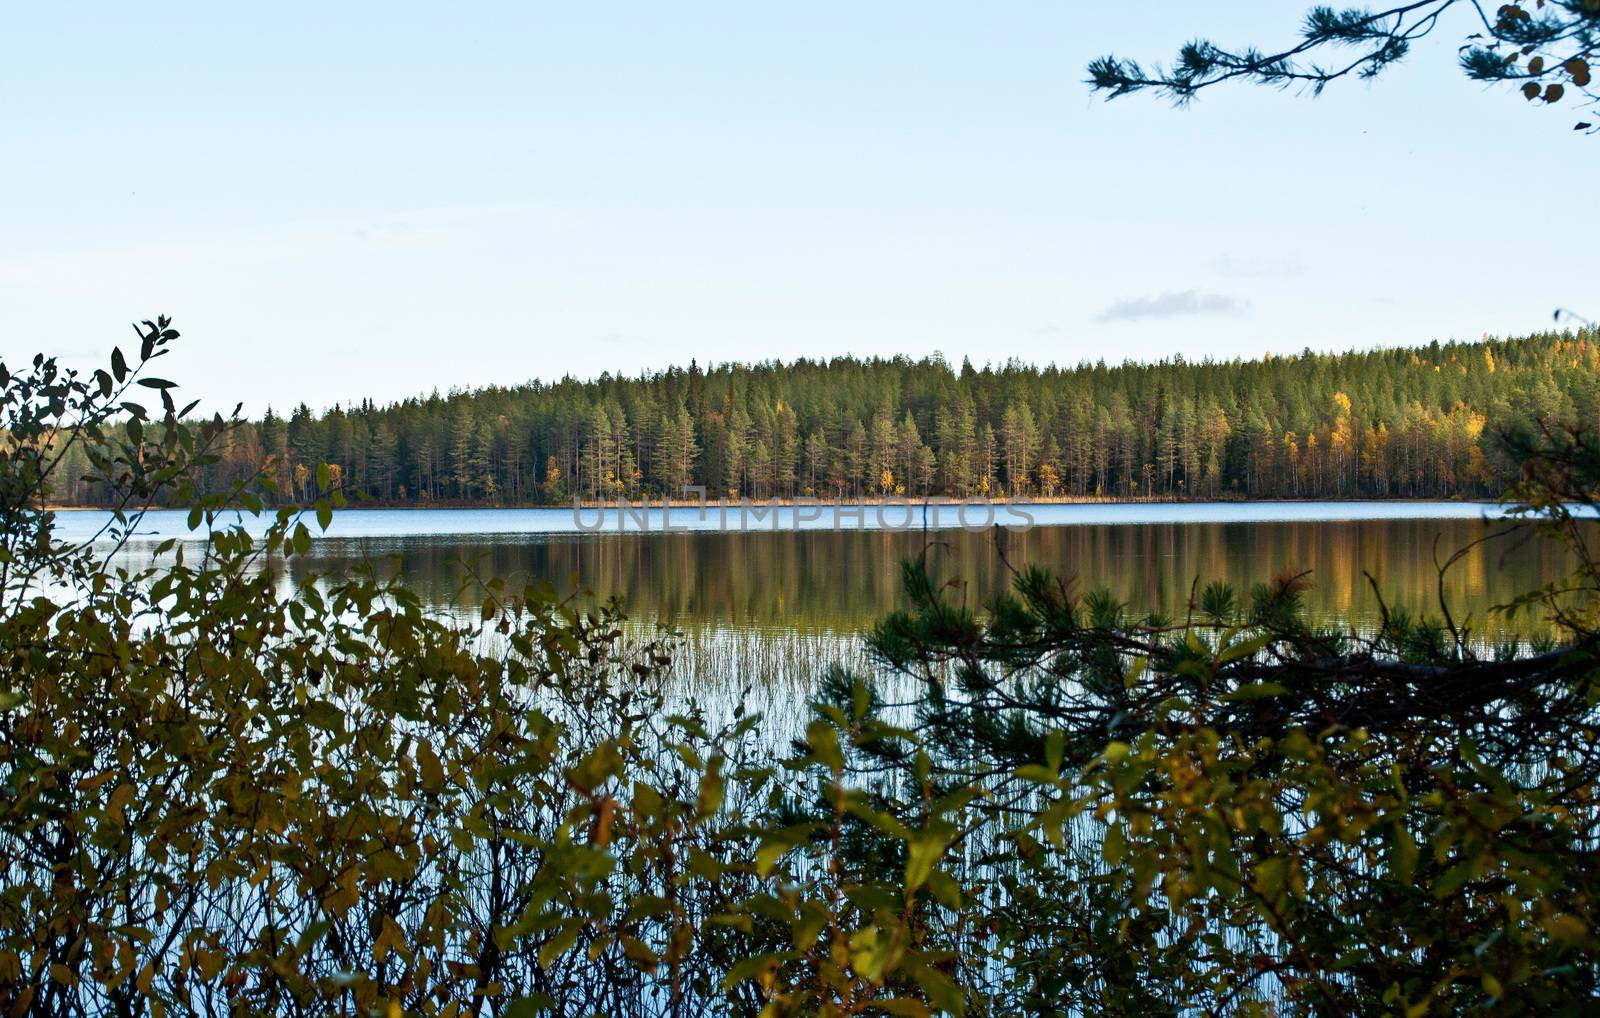 Lake in the region of Kainuu, Finland